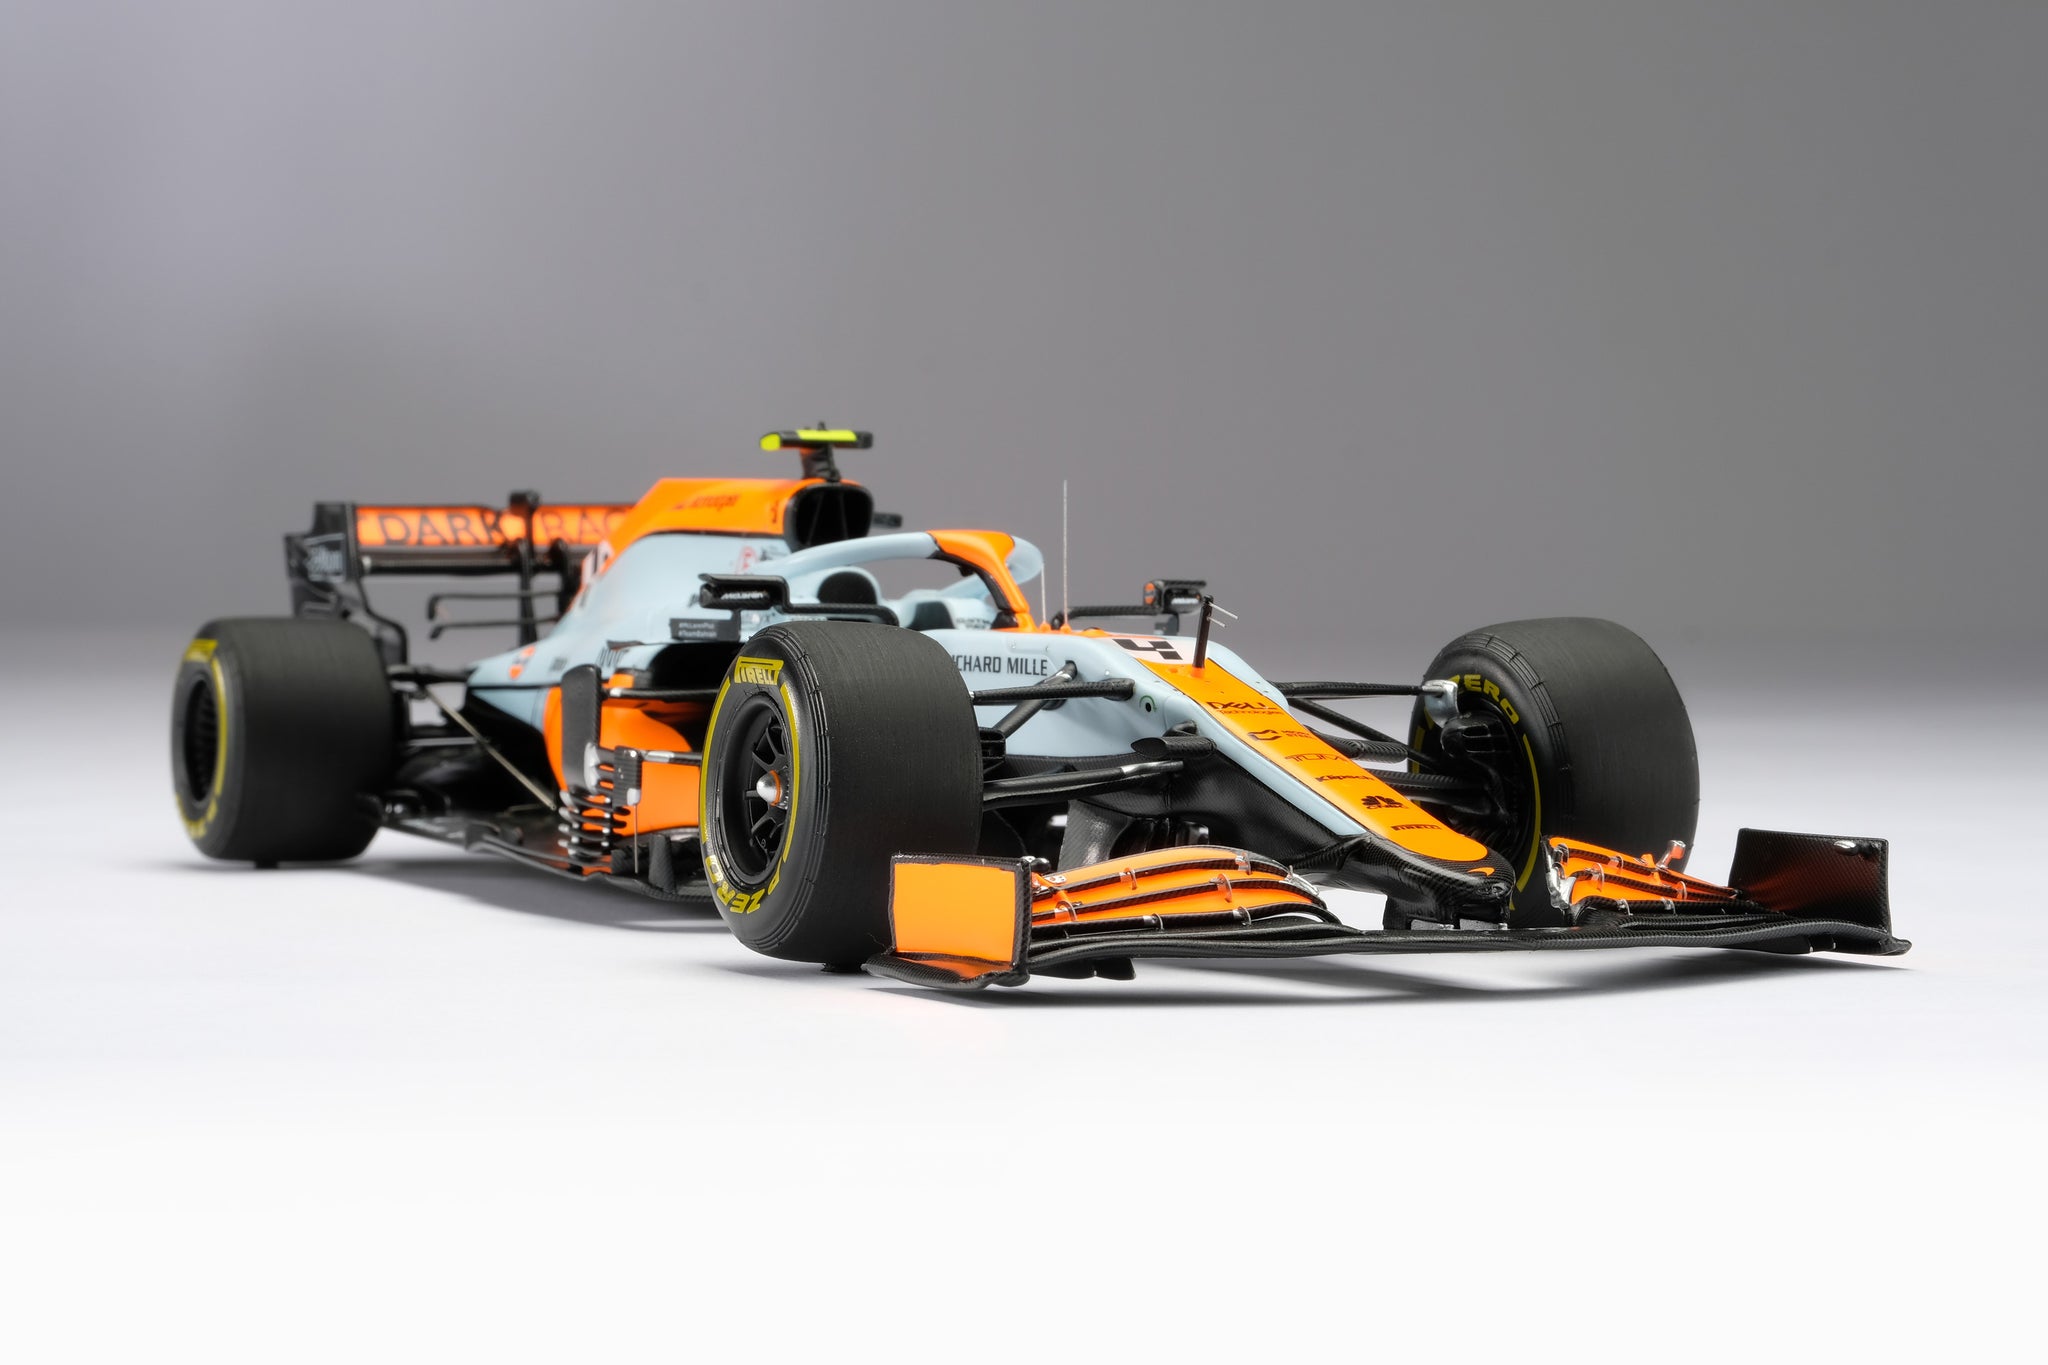  McLaren MCL35M - 2021 Monaco GP at 1:18 scale